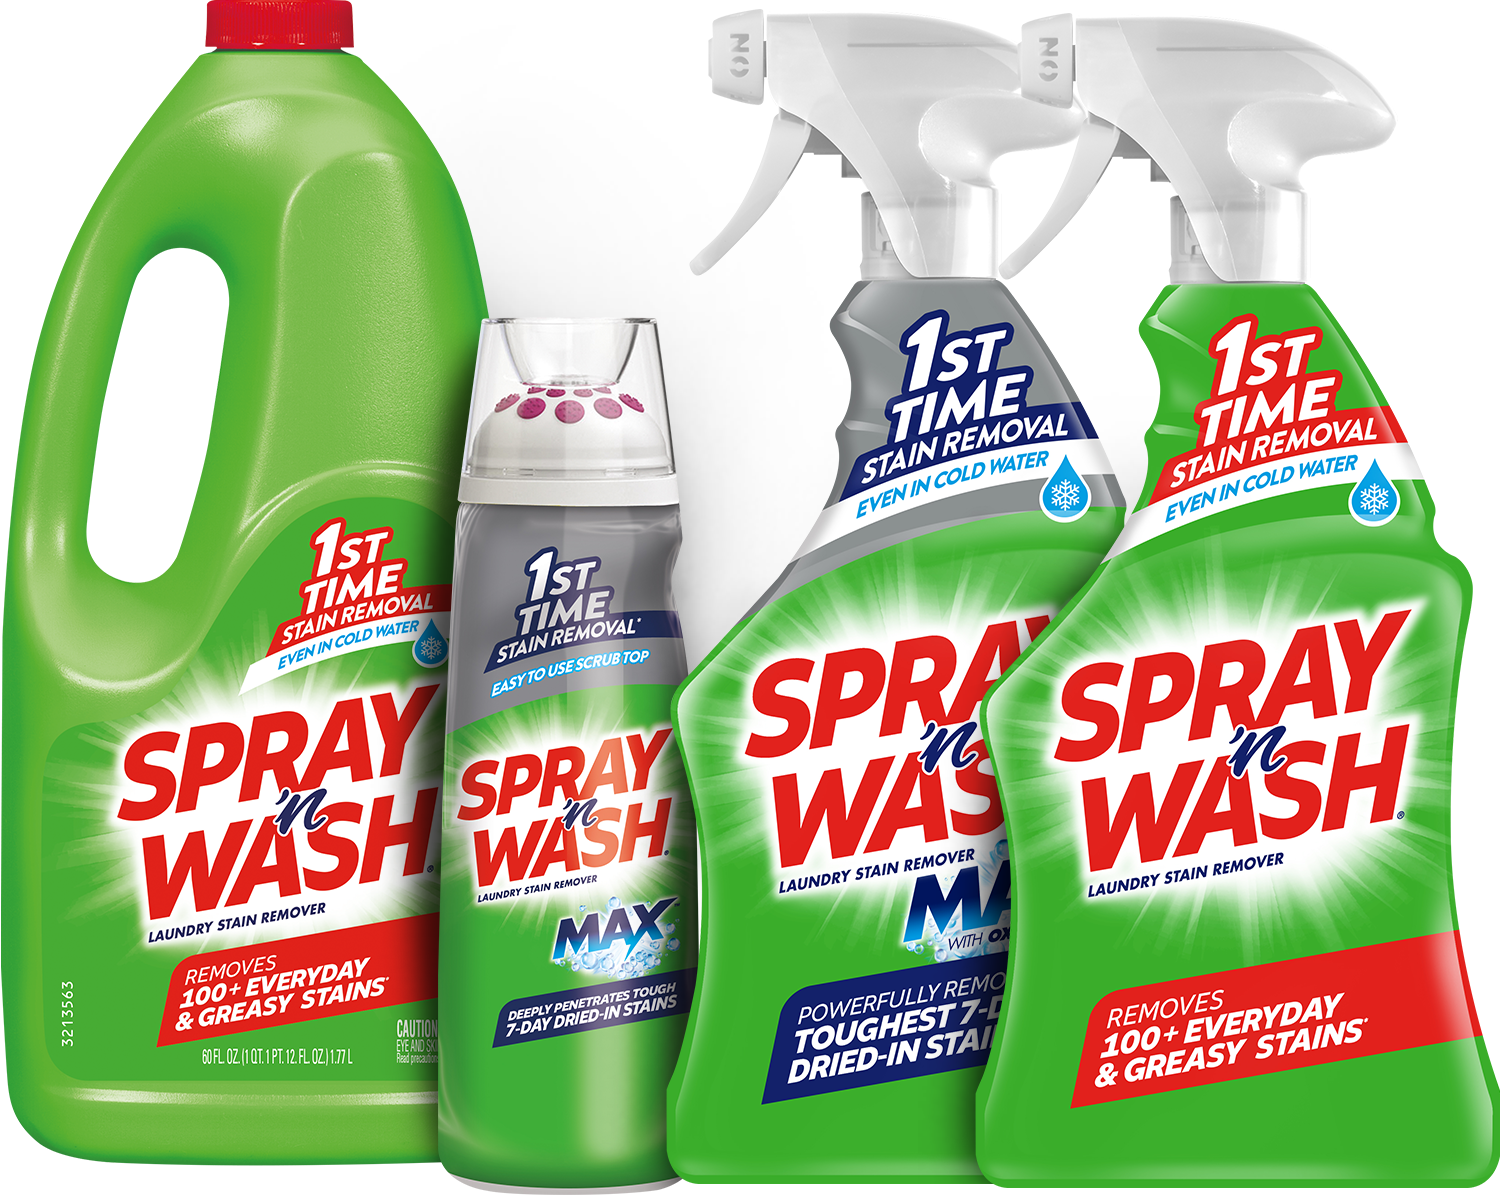 Spray 'n Wash is "Back 'n Better!"